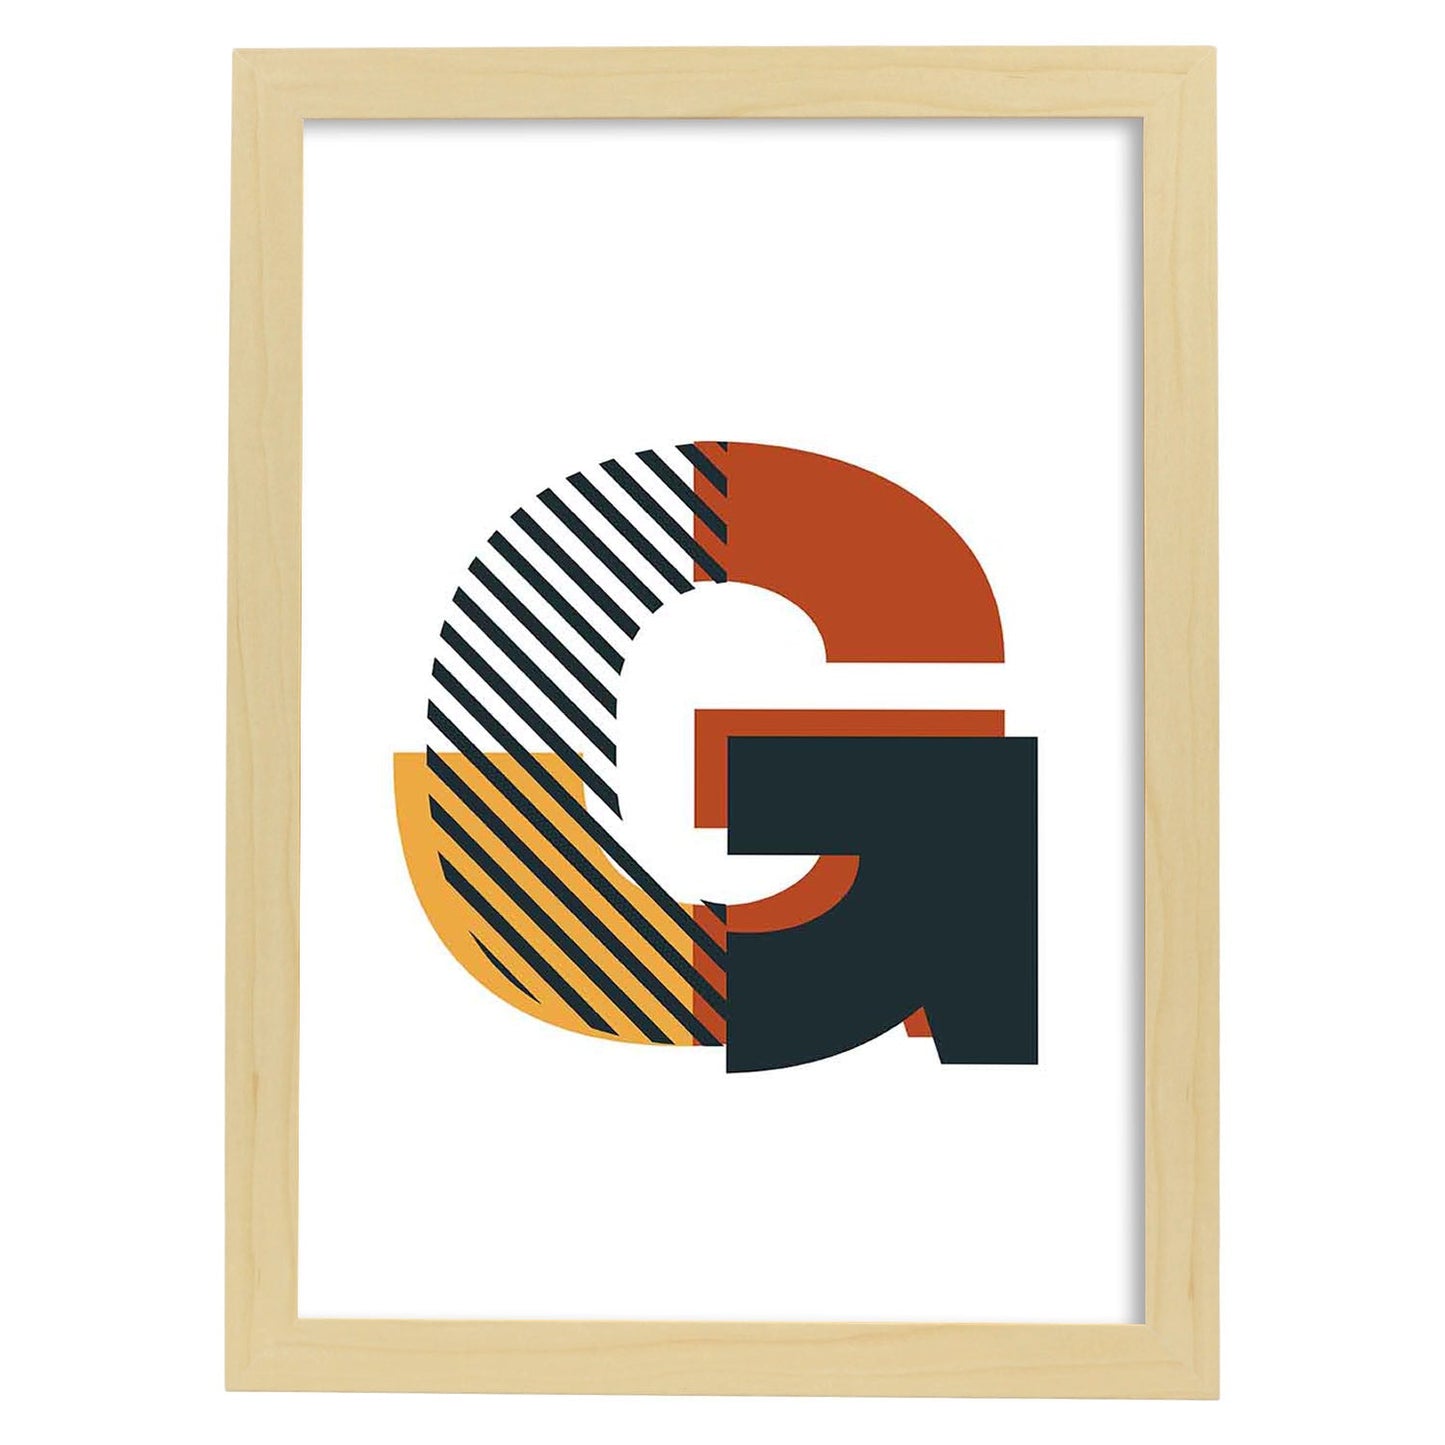 Poster de letra G. Lámina estilo Geometria con imágenes del alfabeto.-Artwork-Nacnic-A3-Marco Madera clara-Nacnic Estudio SL